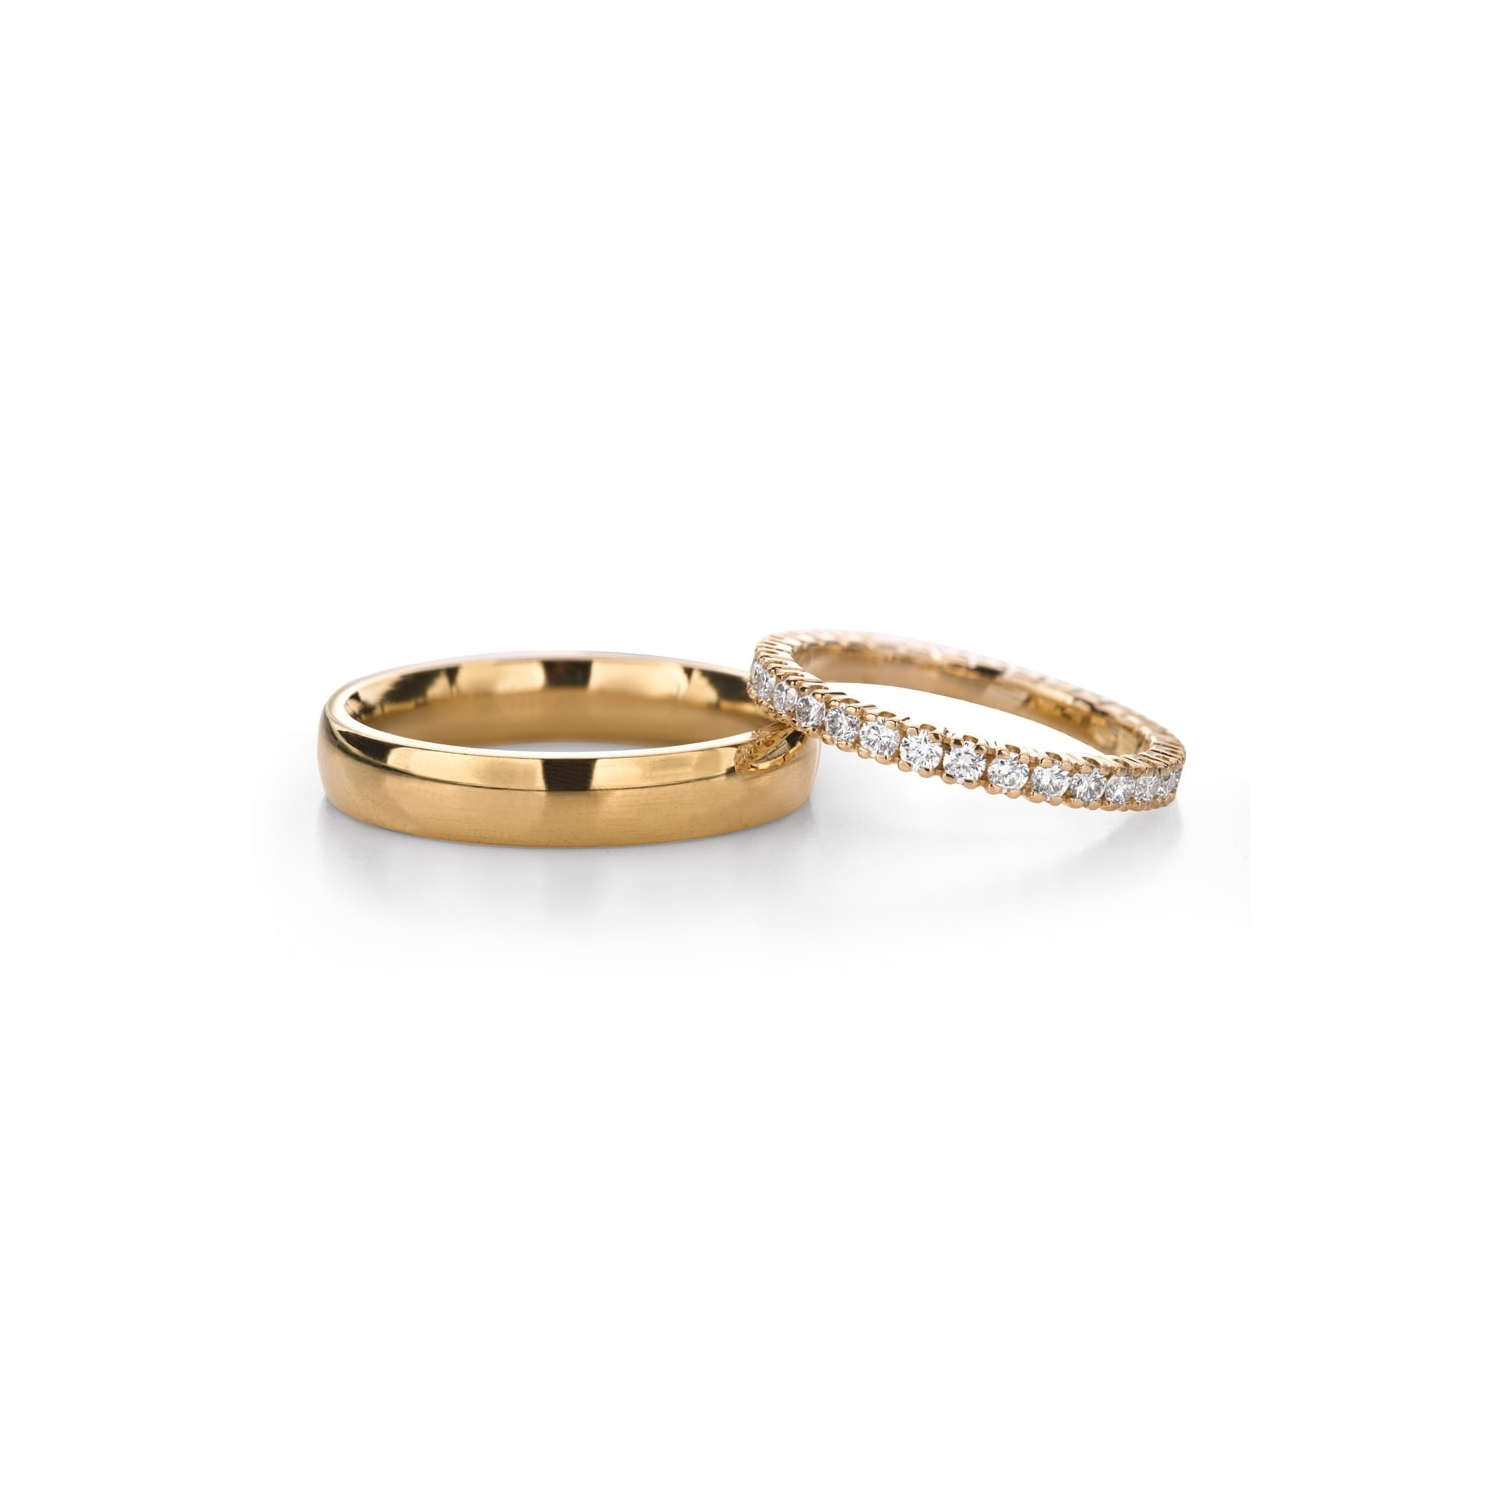 Golden wedding rings with diamonds "VKA 331"